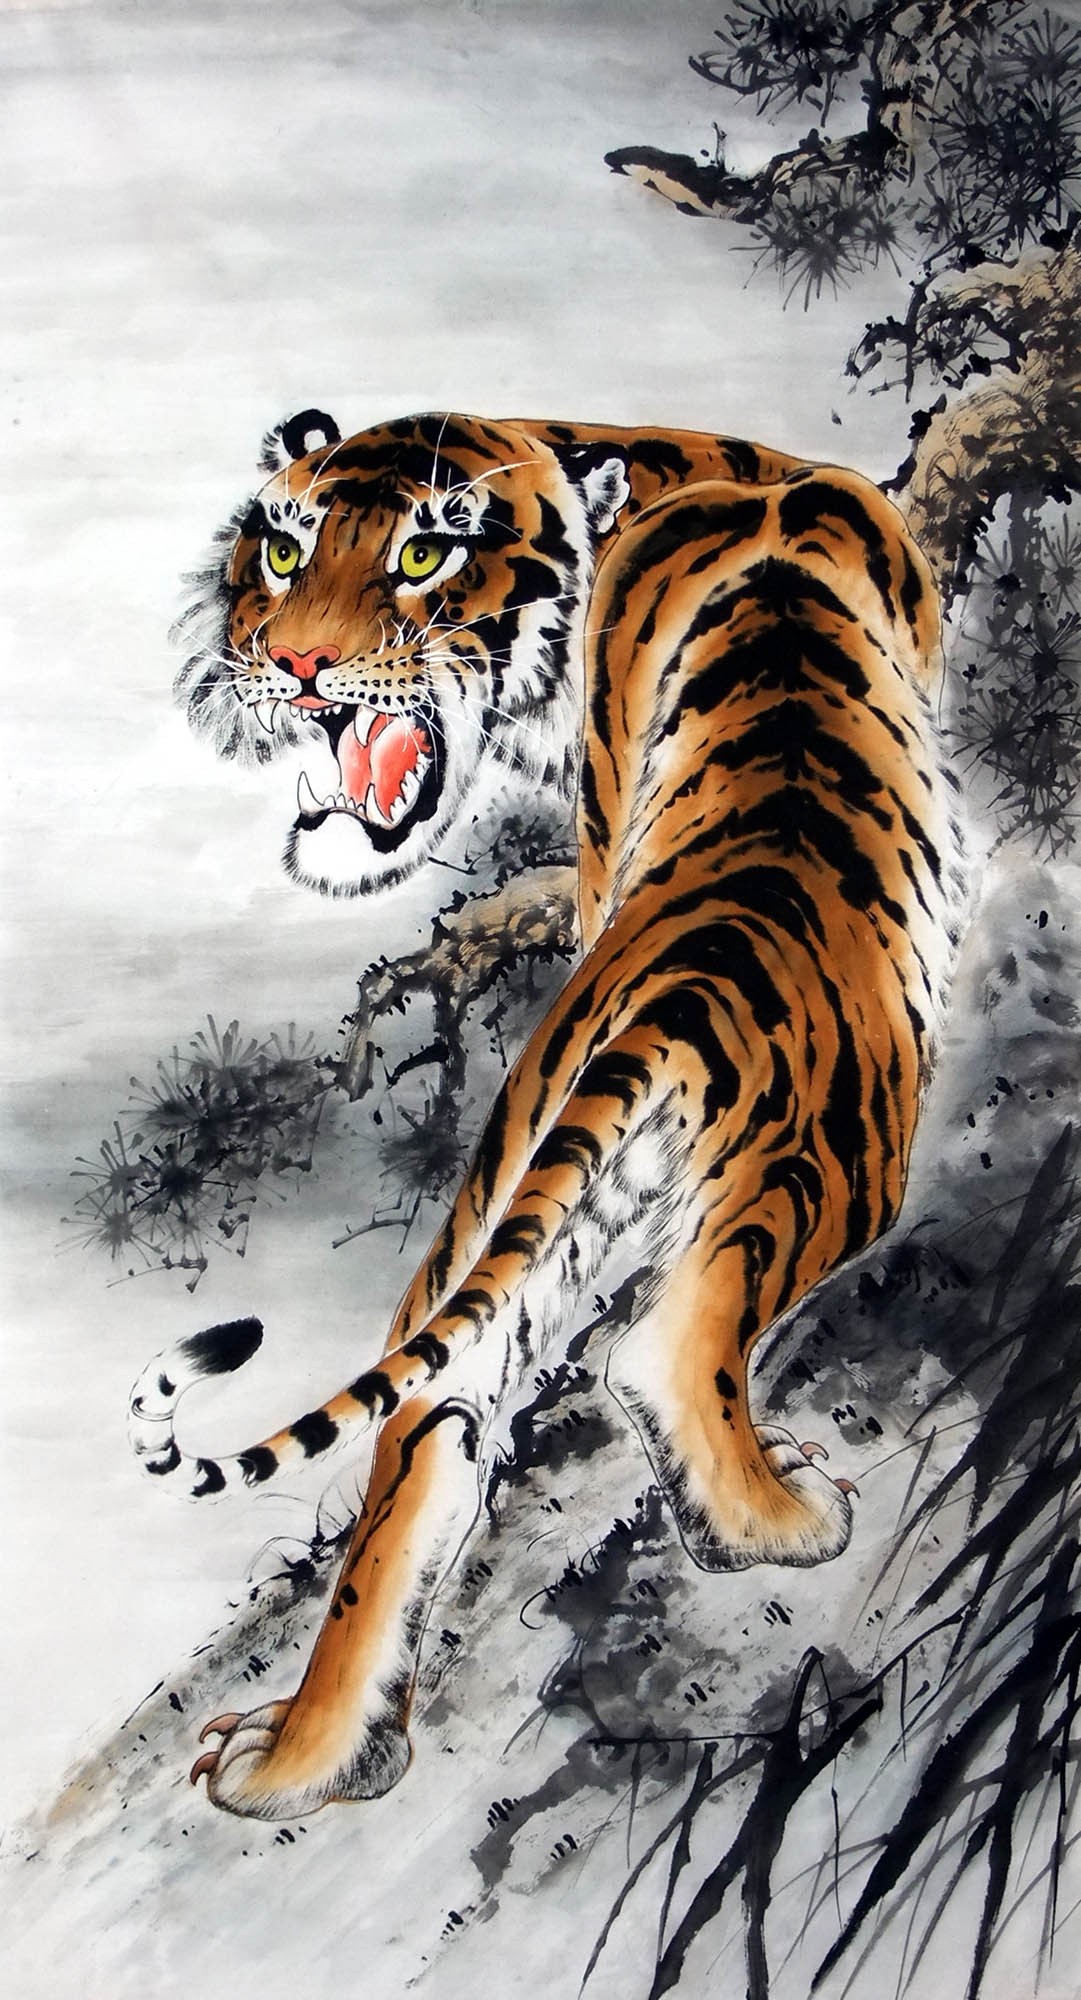 Chinese Tiger Painting - CNAG015144